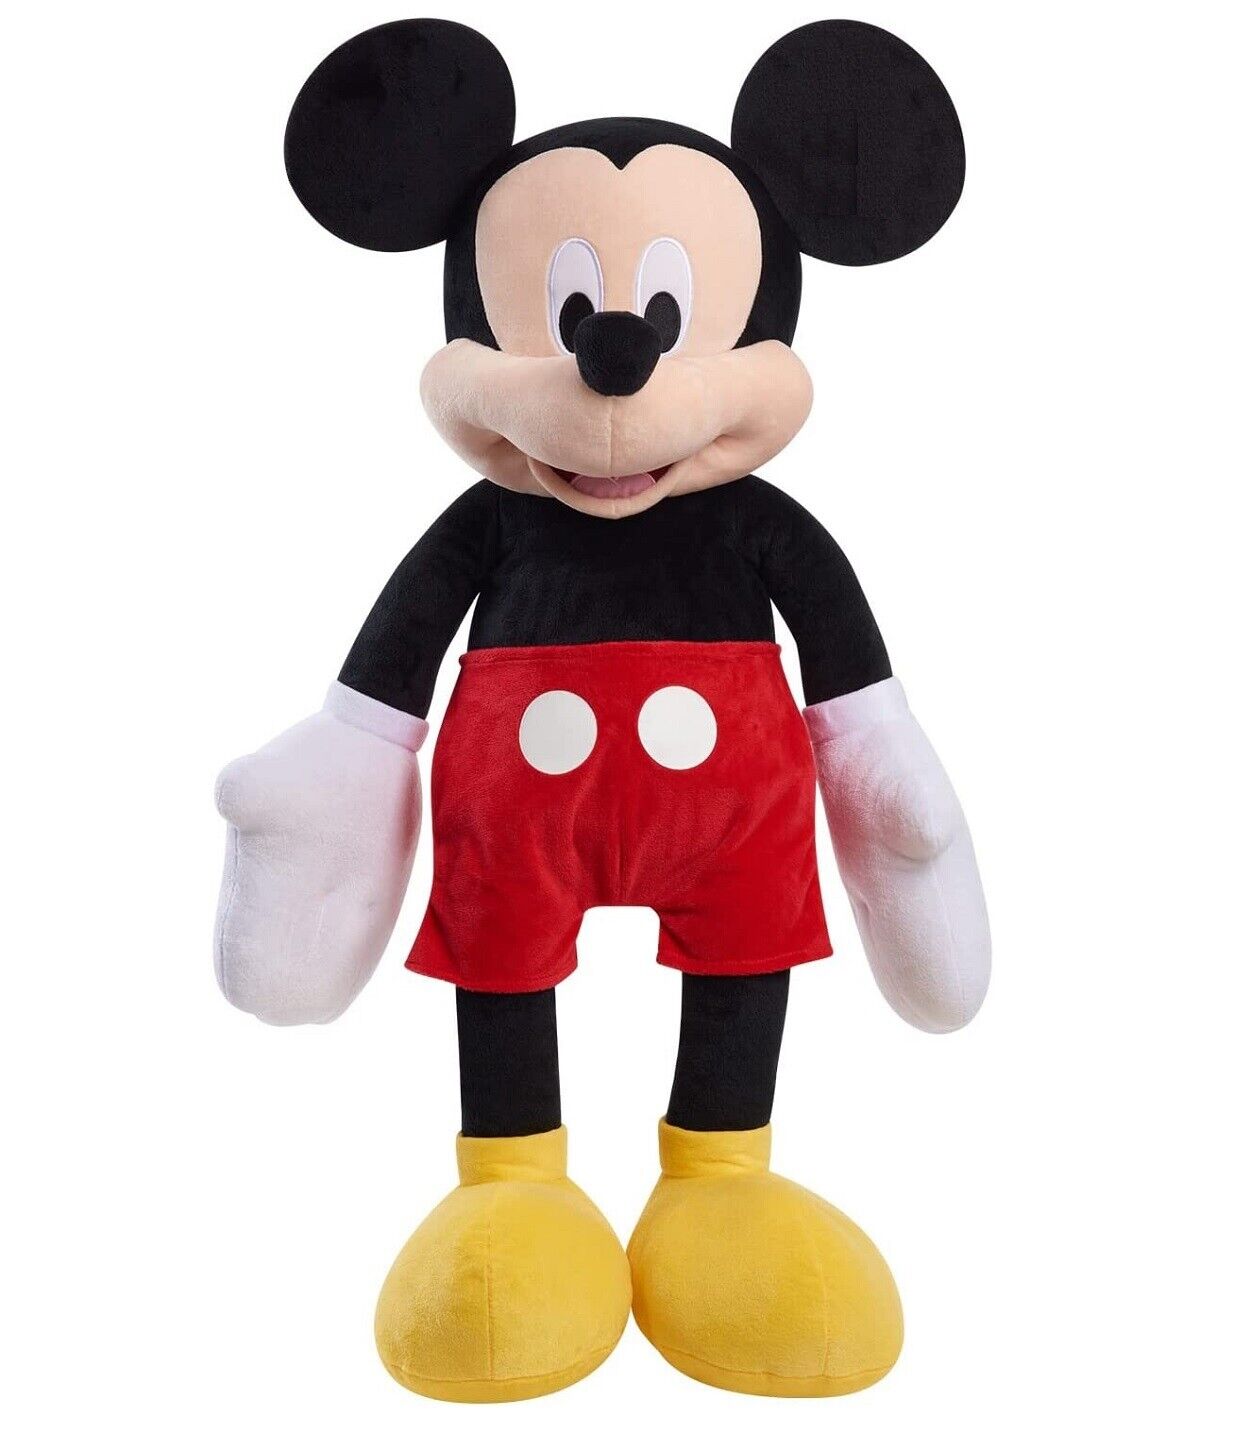 Disney Baby Mickey Mouse Jumbo Stuffed Animal Plush Toy 40inch